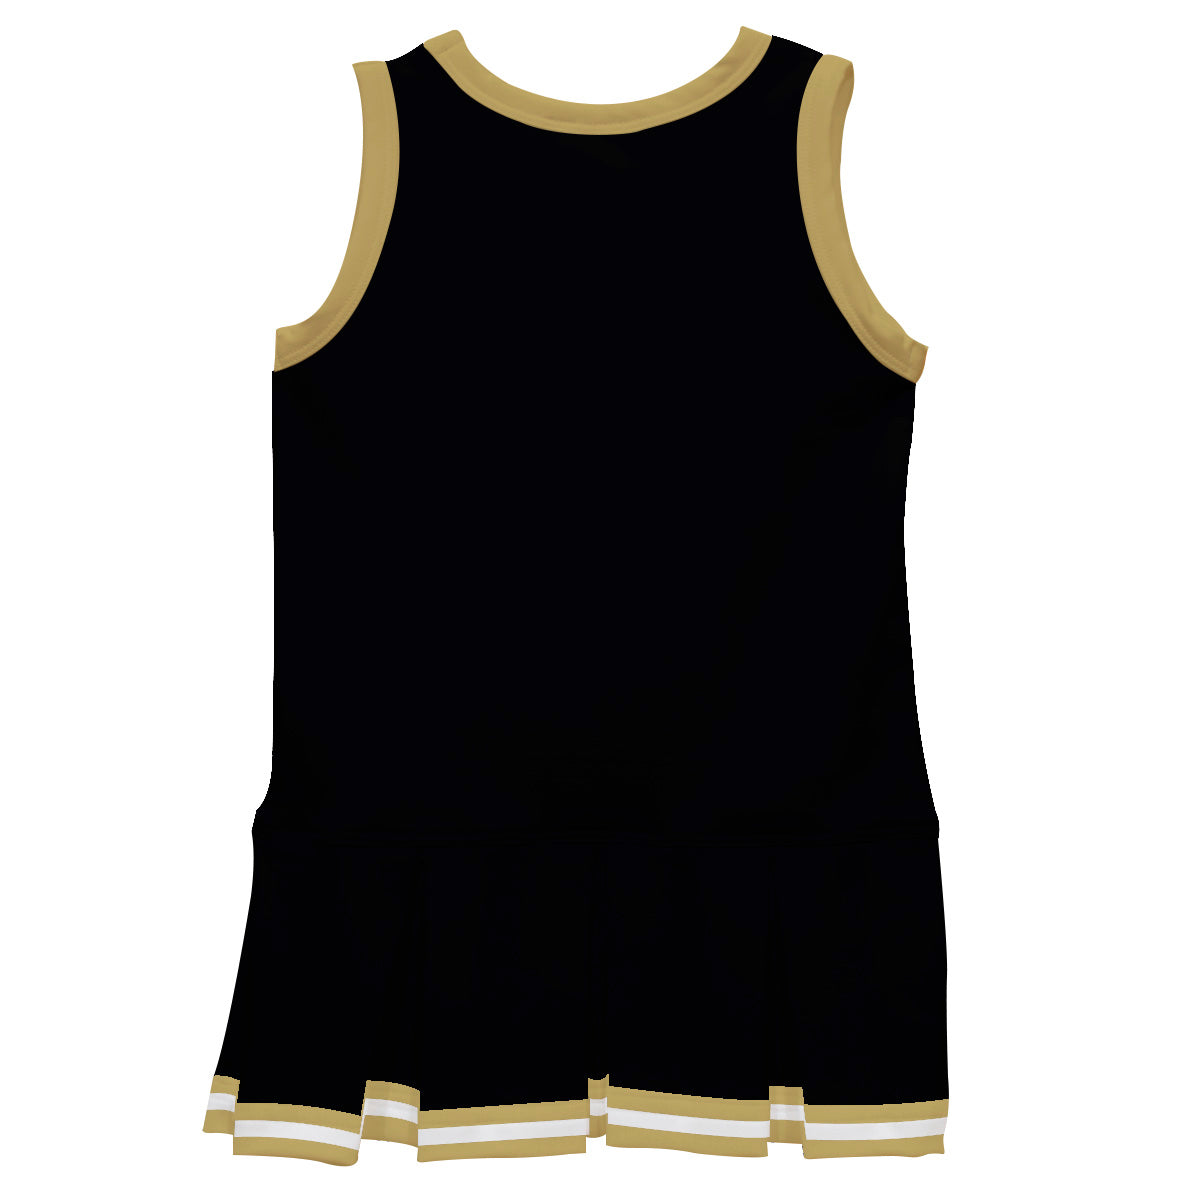 Green & White Sleeveless Cheerleader Dress V2 - Wimziy&Co.